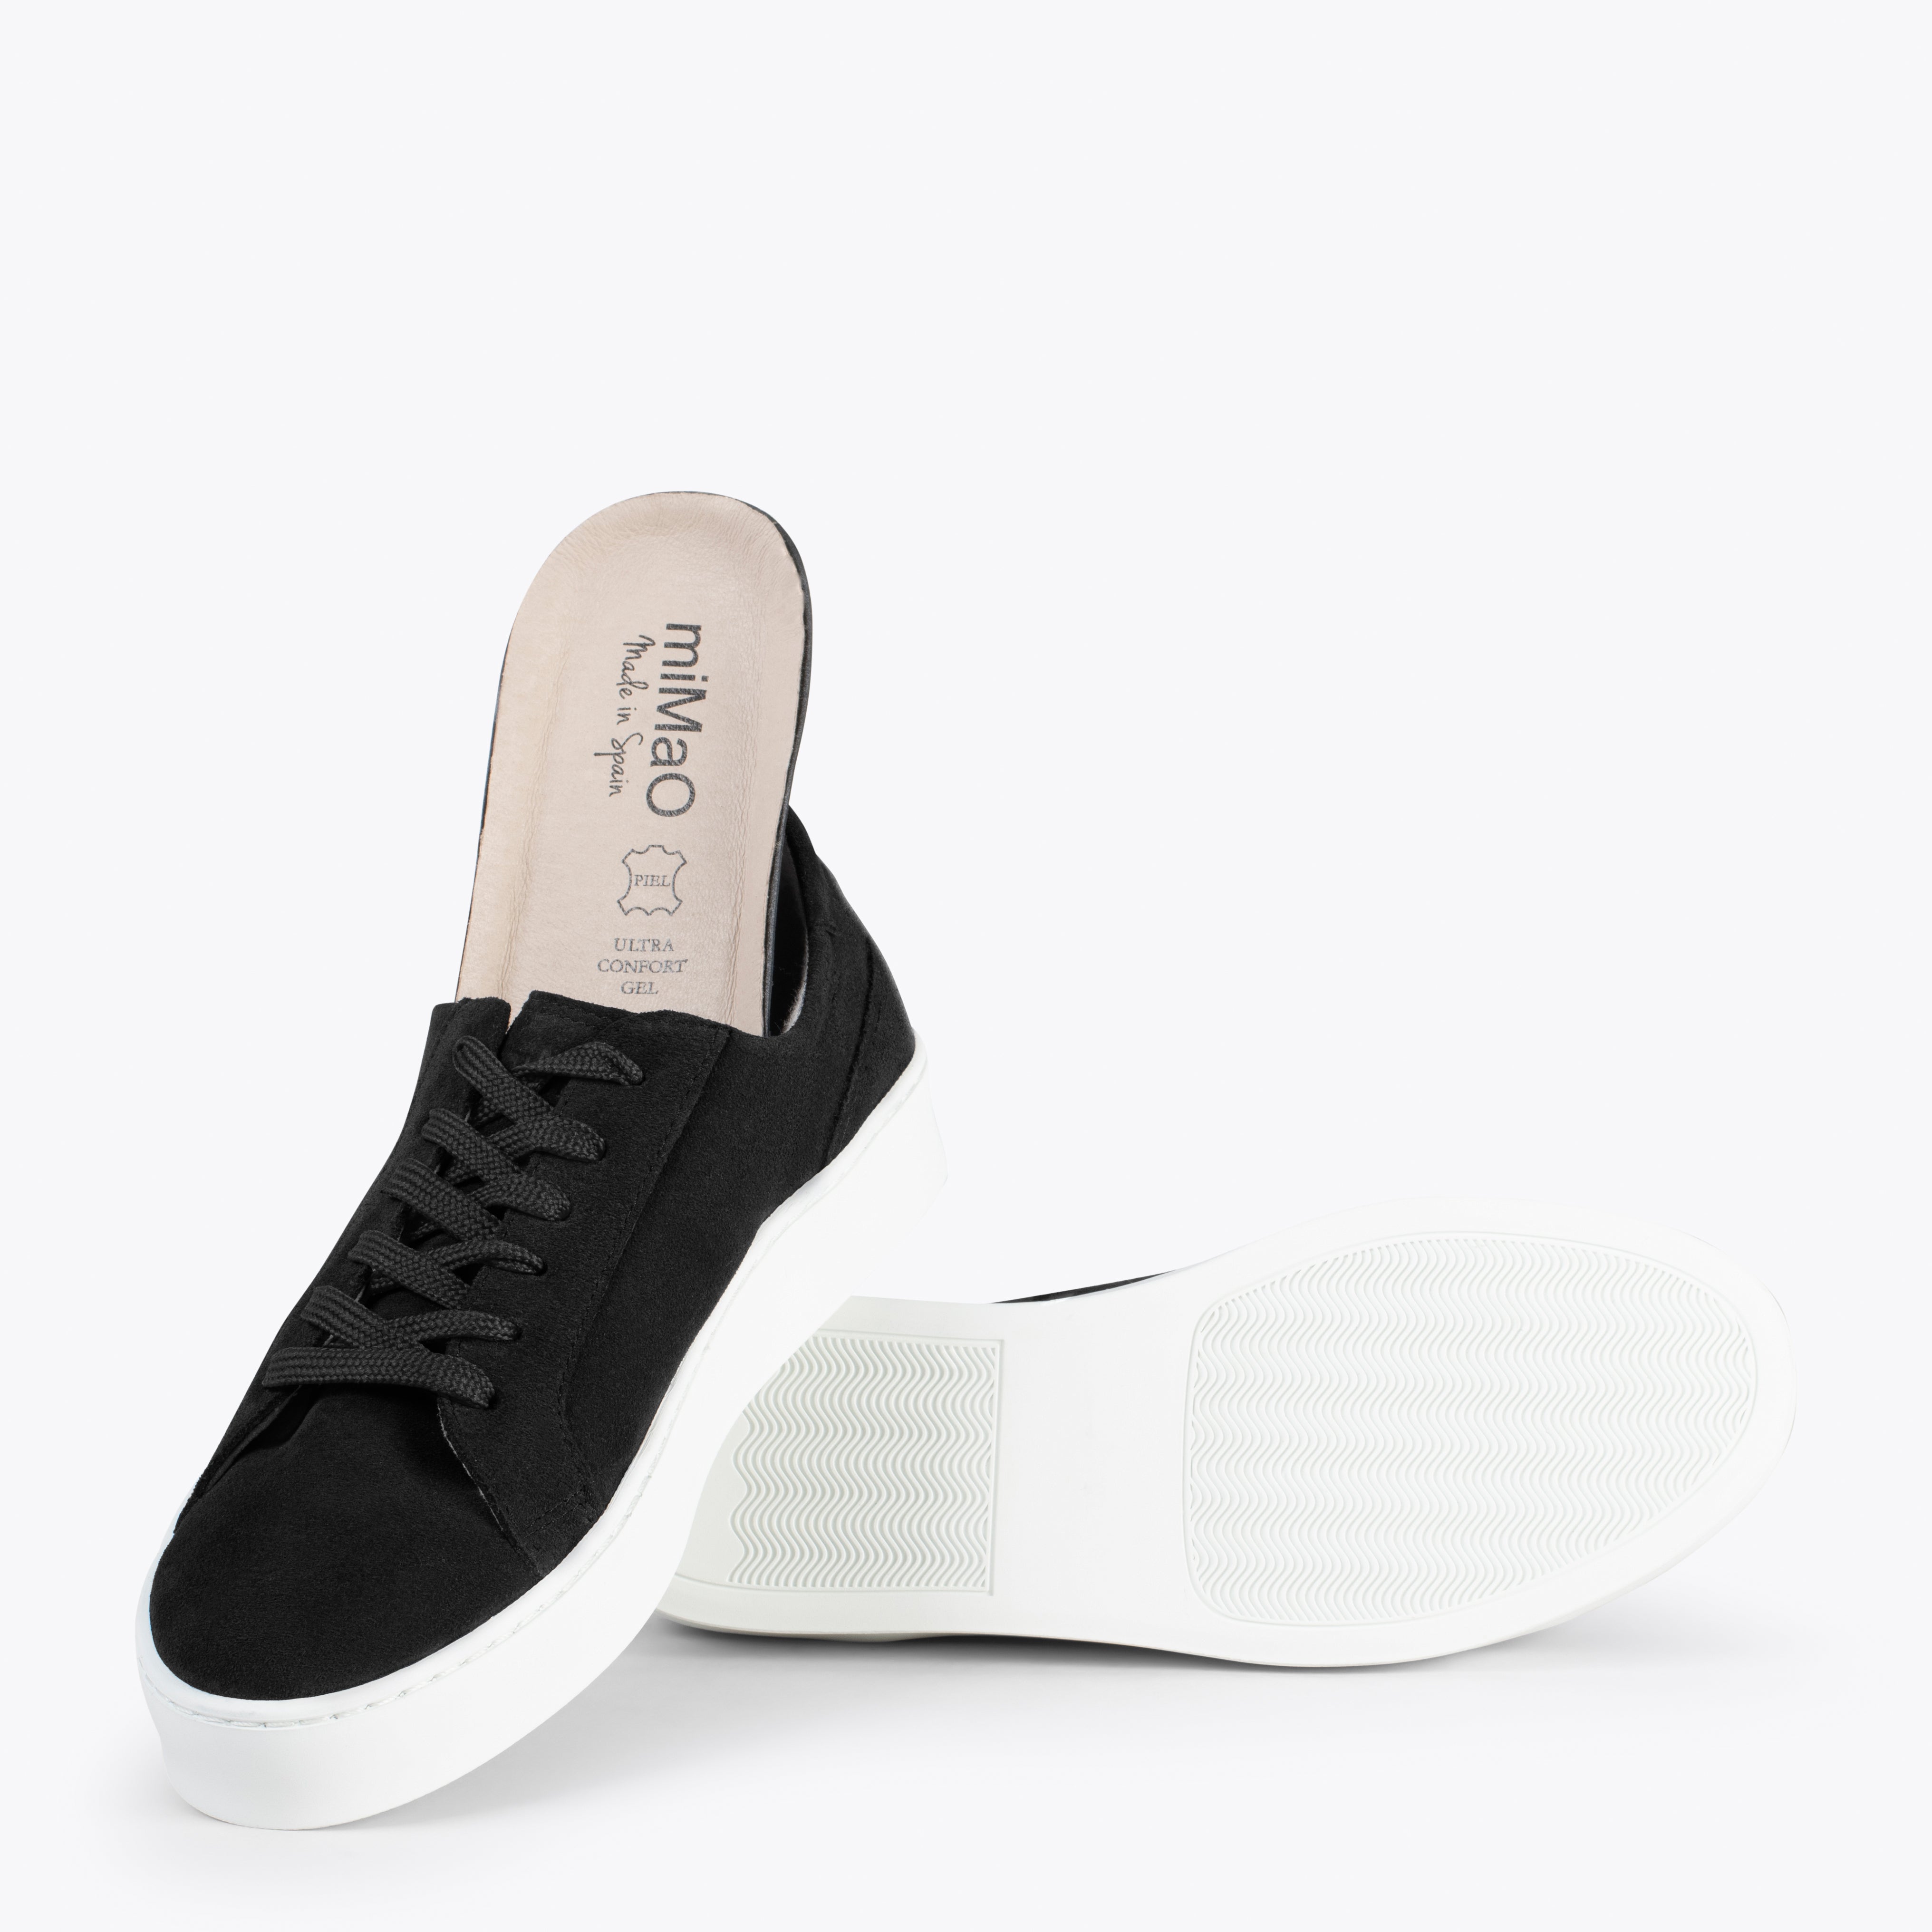 ENJOY – BLACK suede lifestyle sneakers